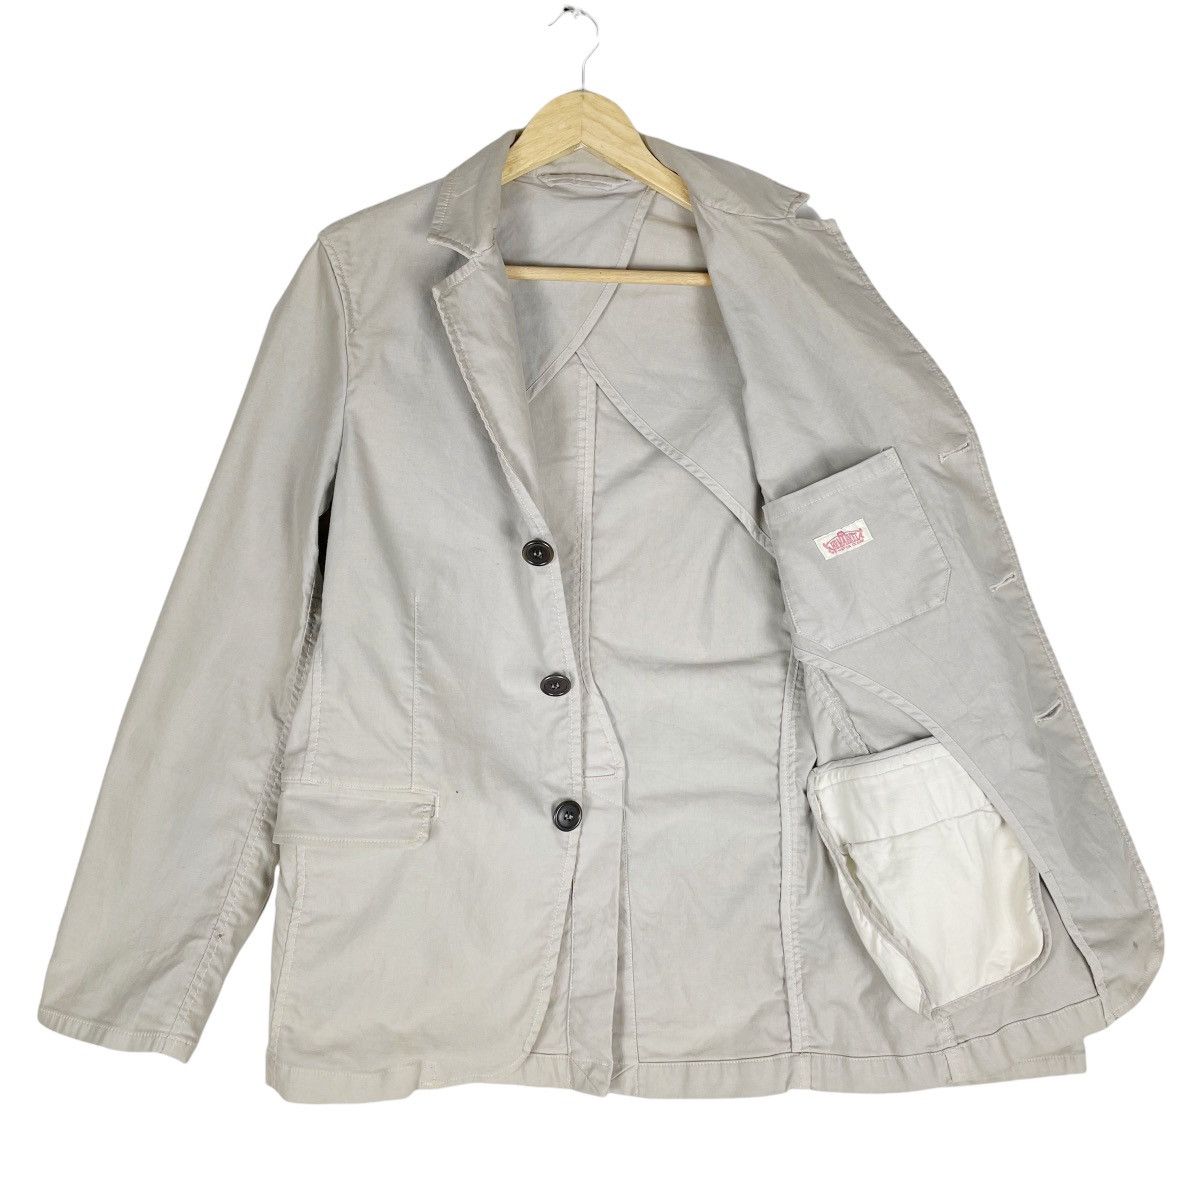 🔥HR Market Japan Workwear Jacket - 3